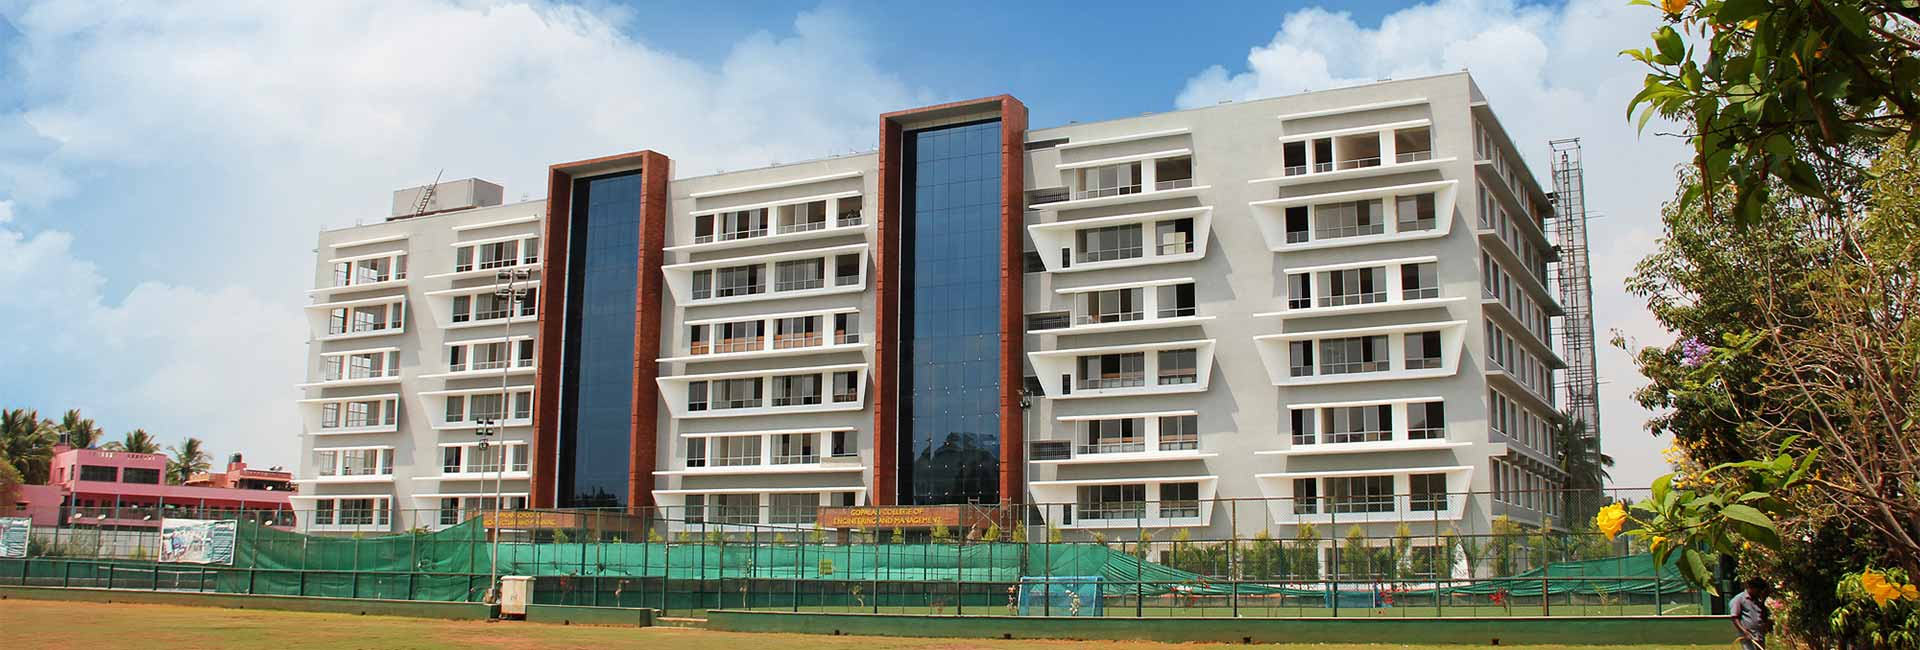 Gopalan School of Architecture and Planning, Bengaluru Image